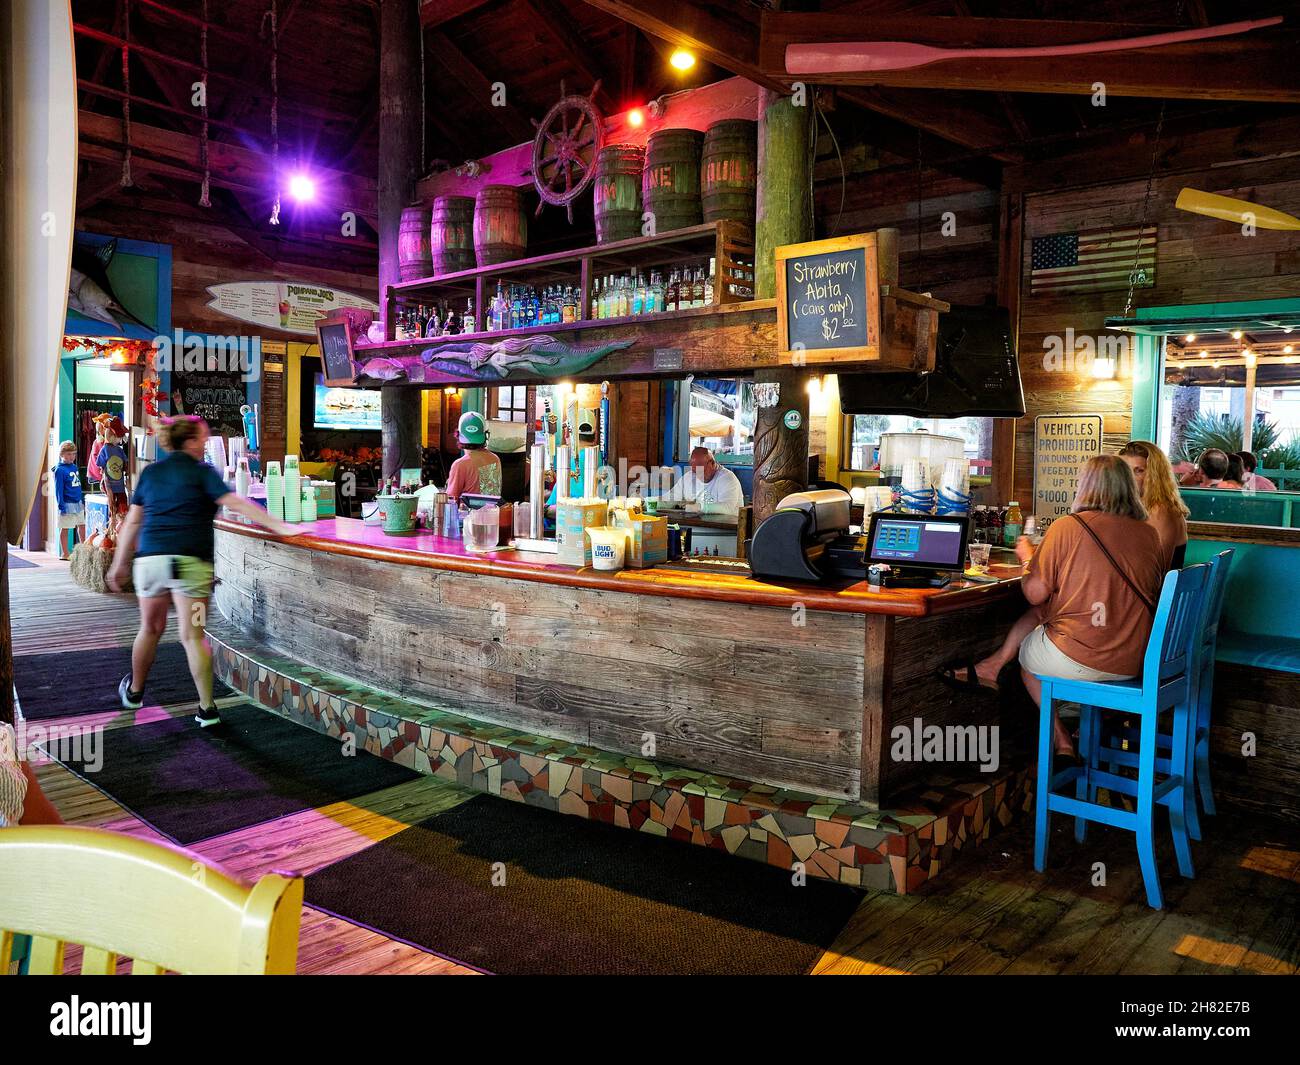 Pompano Joe's, beach bar and restaurant, interior bar with patrons or customers and bartender in Destin Florida, USA. Stock Photo